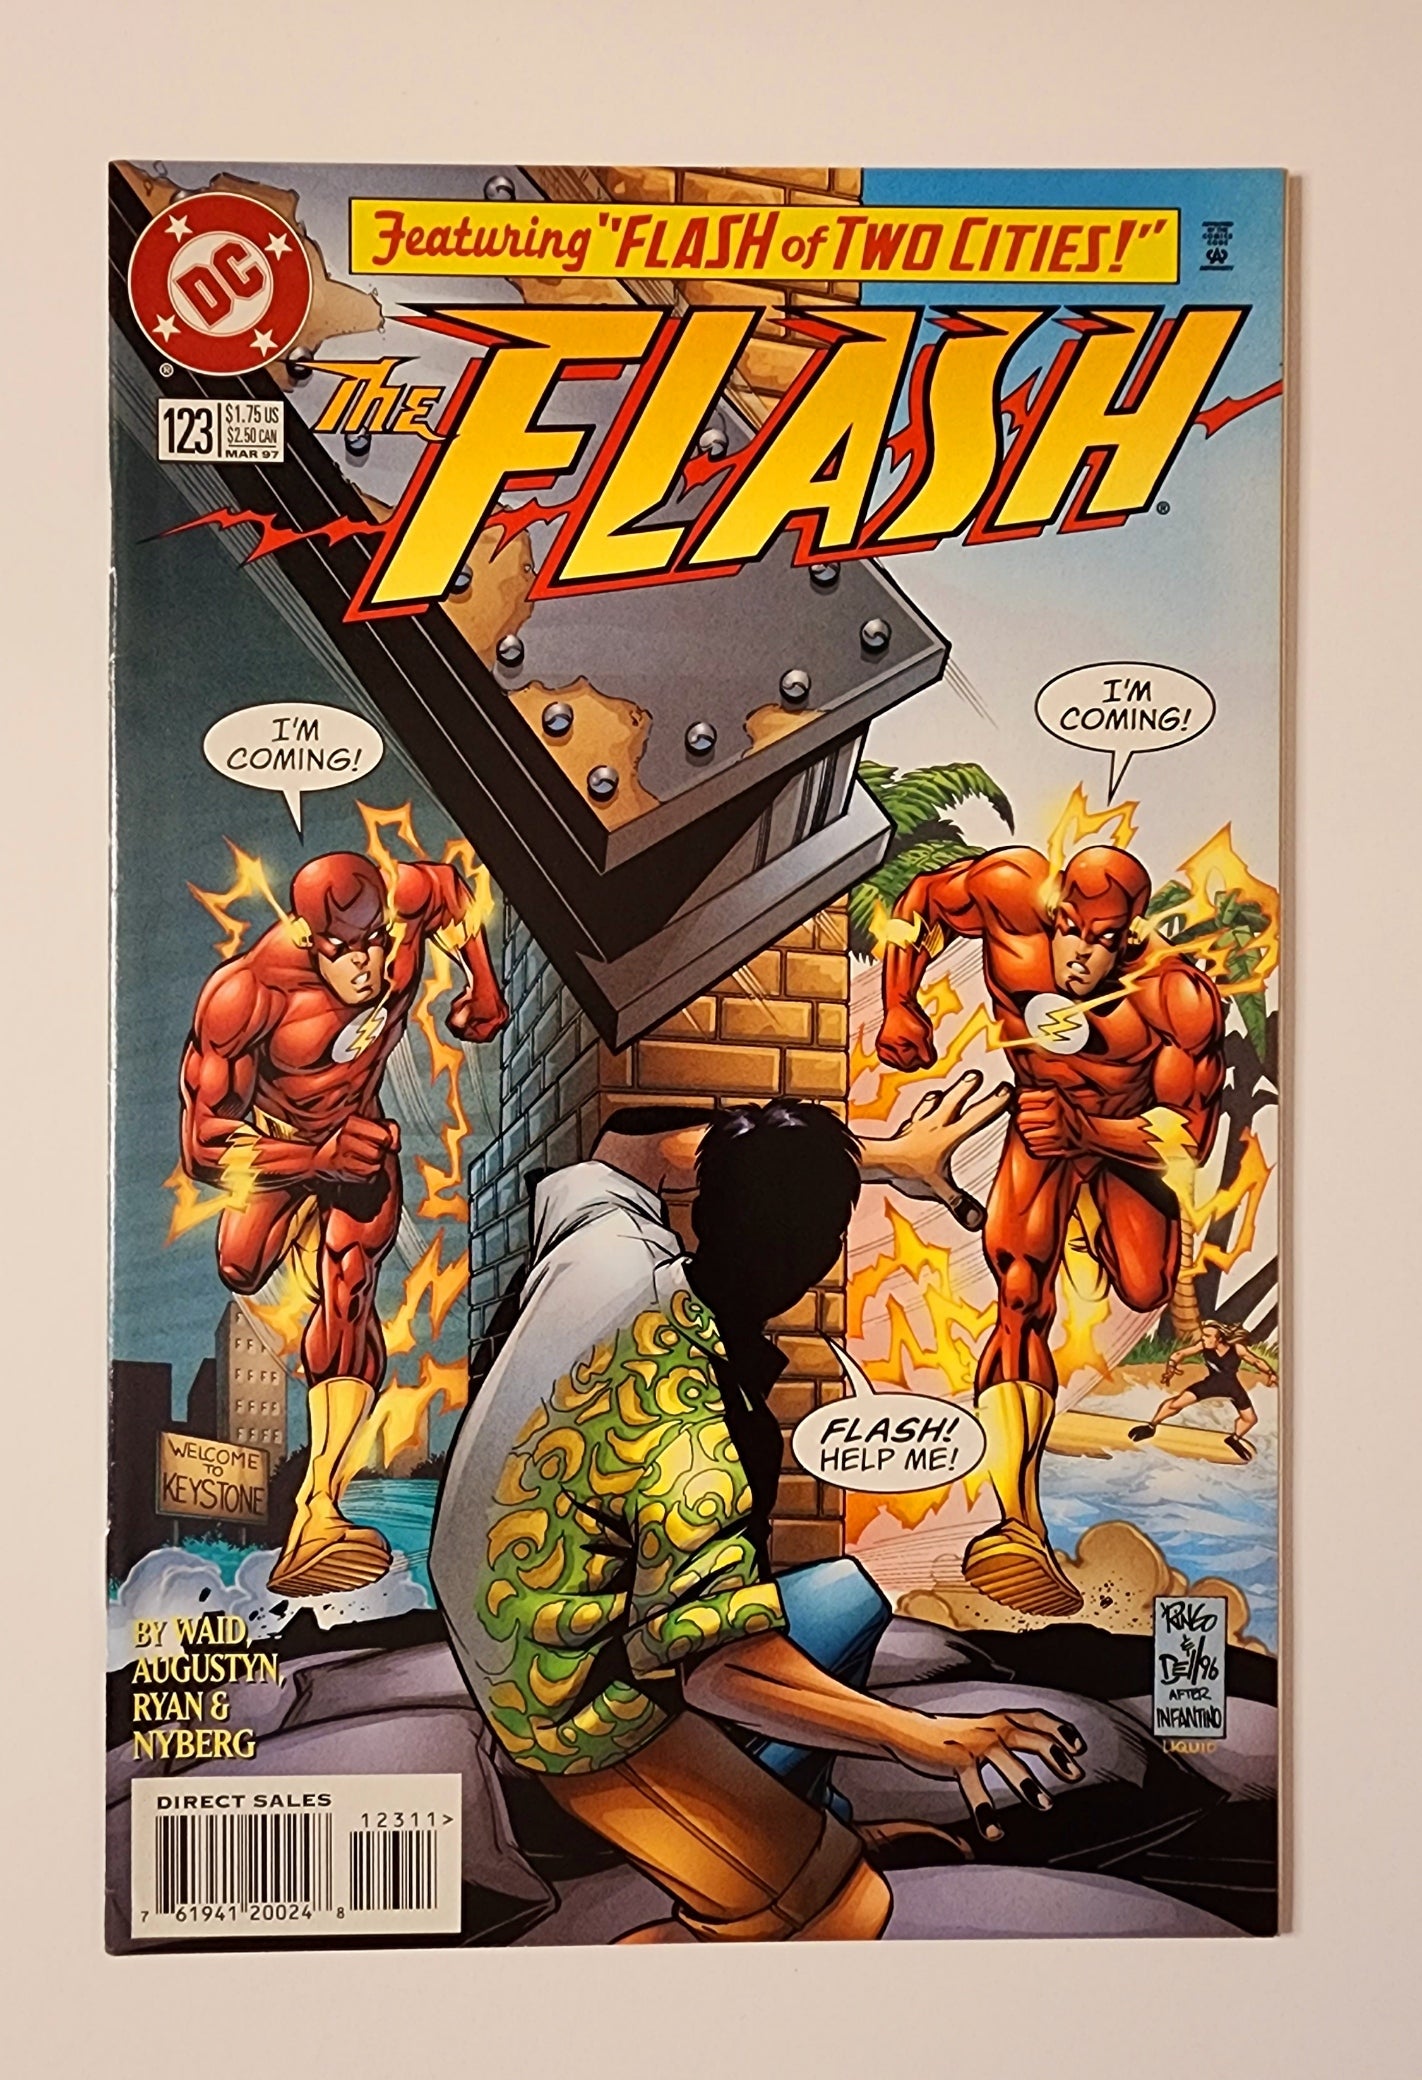 The Flash (Vol. 2) #123 (VF+)